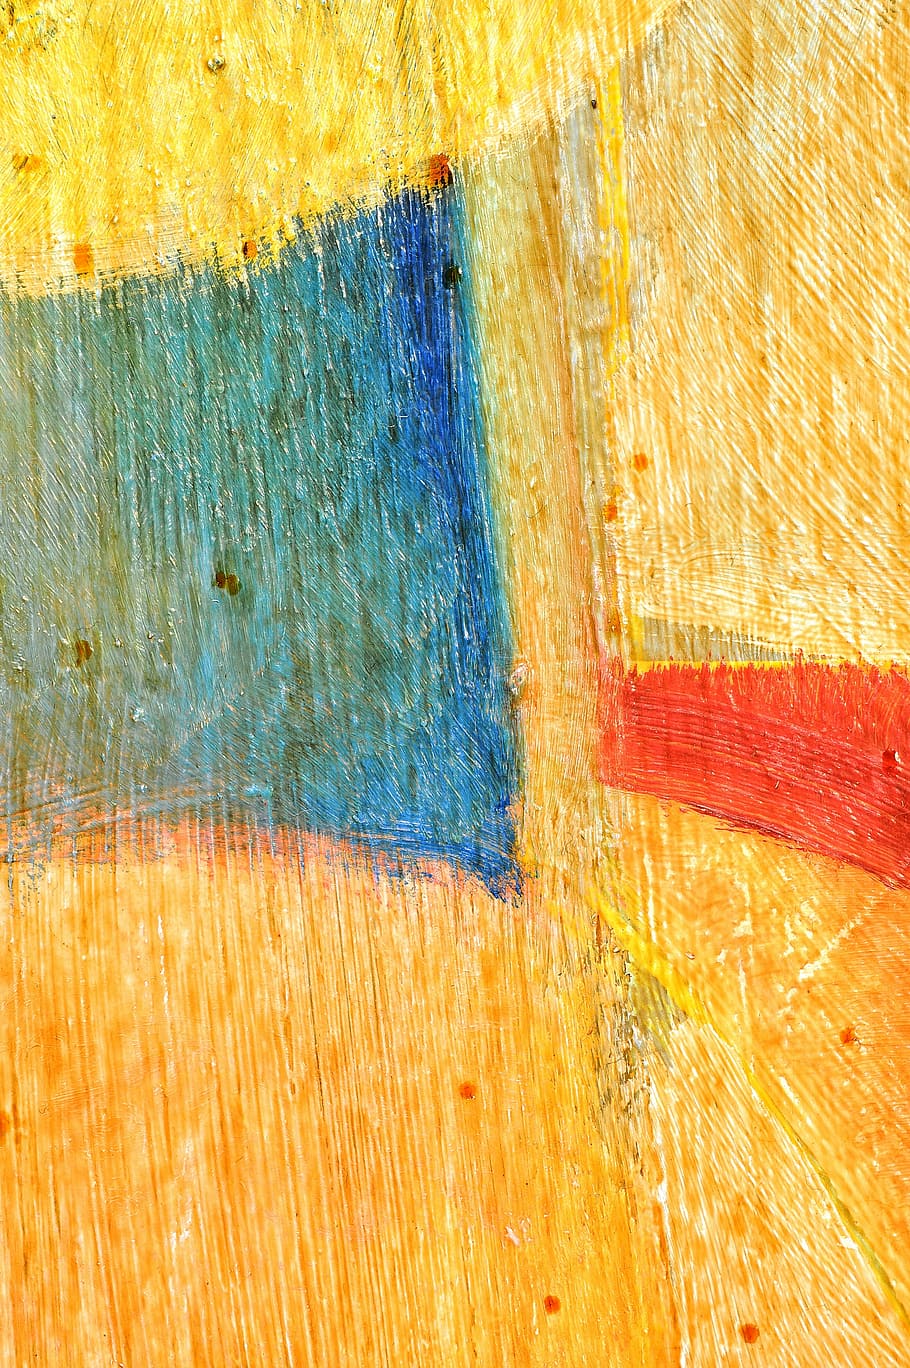 biru, kuning, abstrak, lukisan, kerangka kerja, menggambar, warna, tekstur, cat, dinding